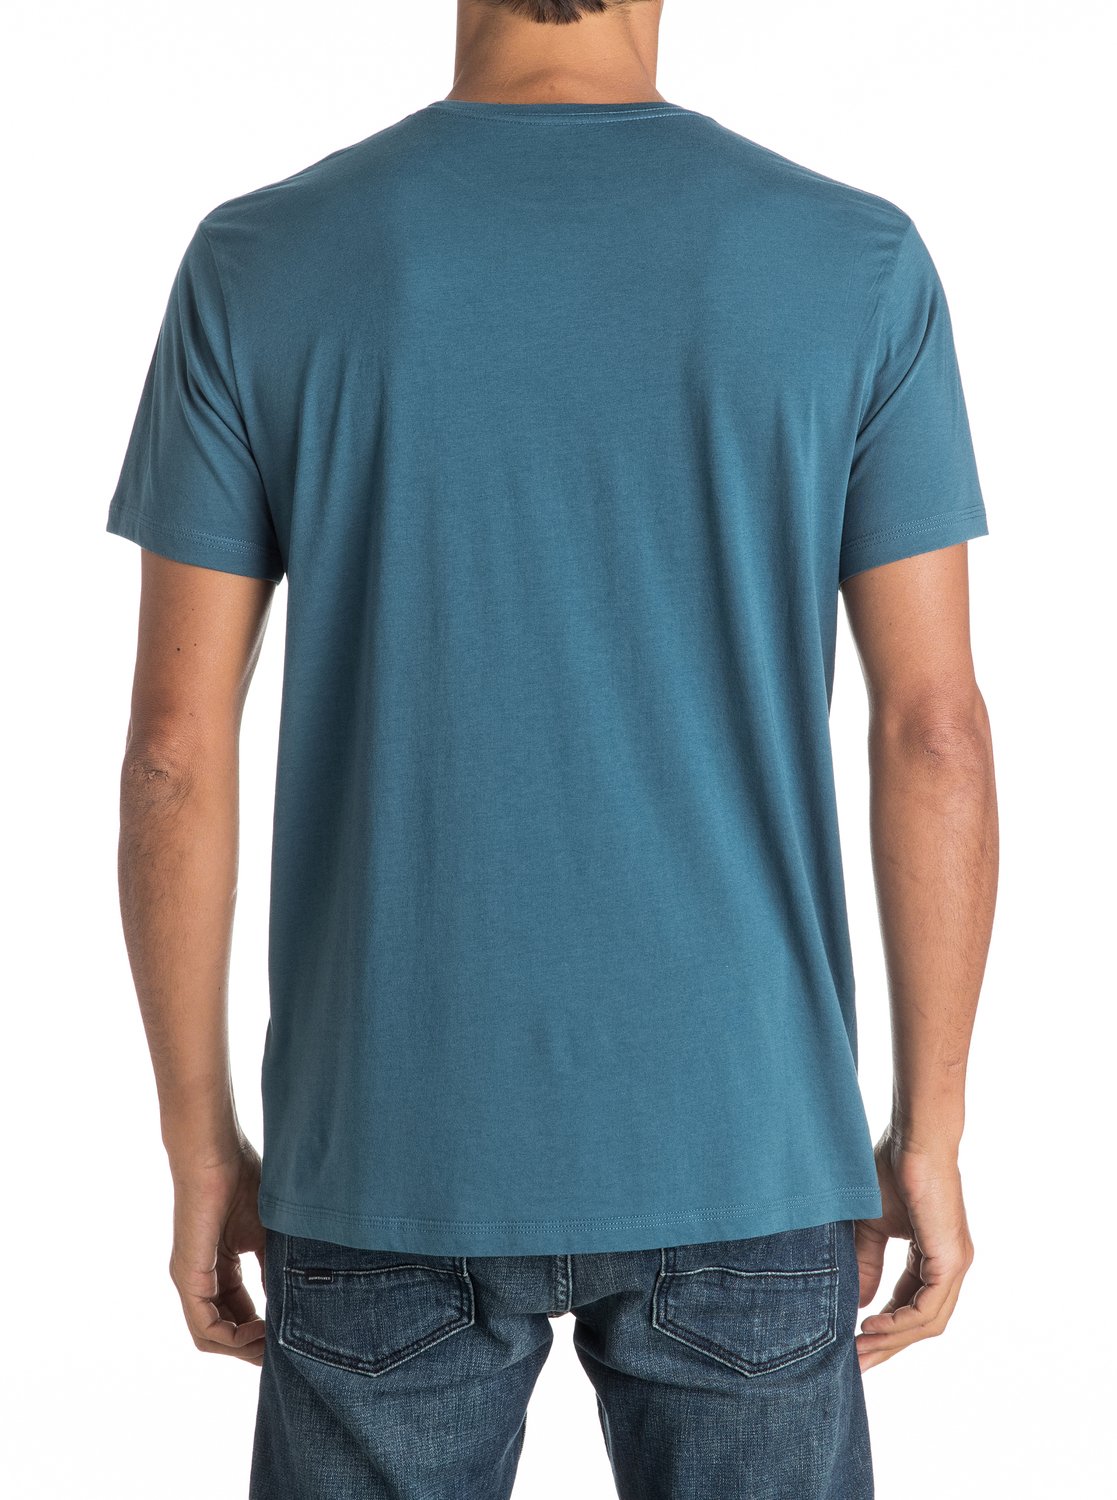 Garment Dye Engraved - T-Shirt 3613372380525 | Quiksilver